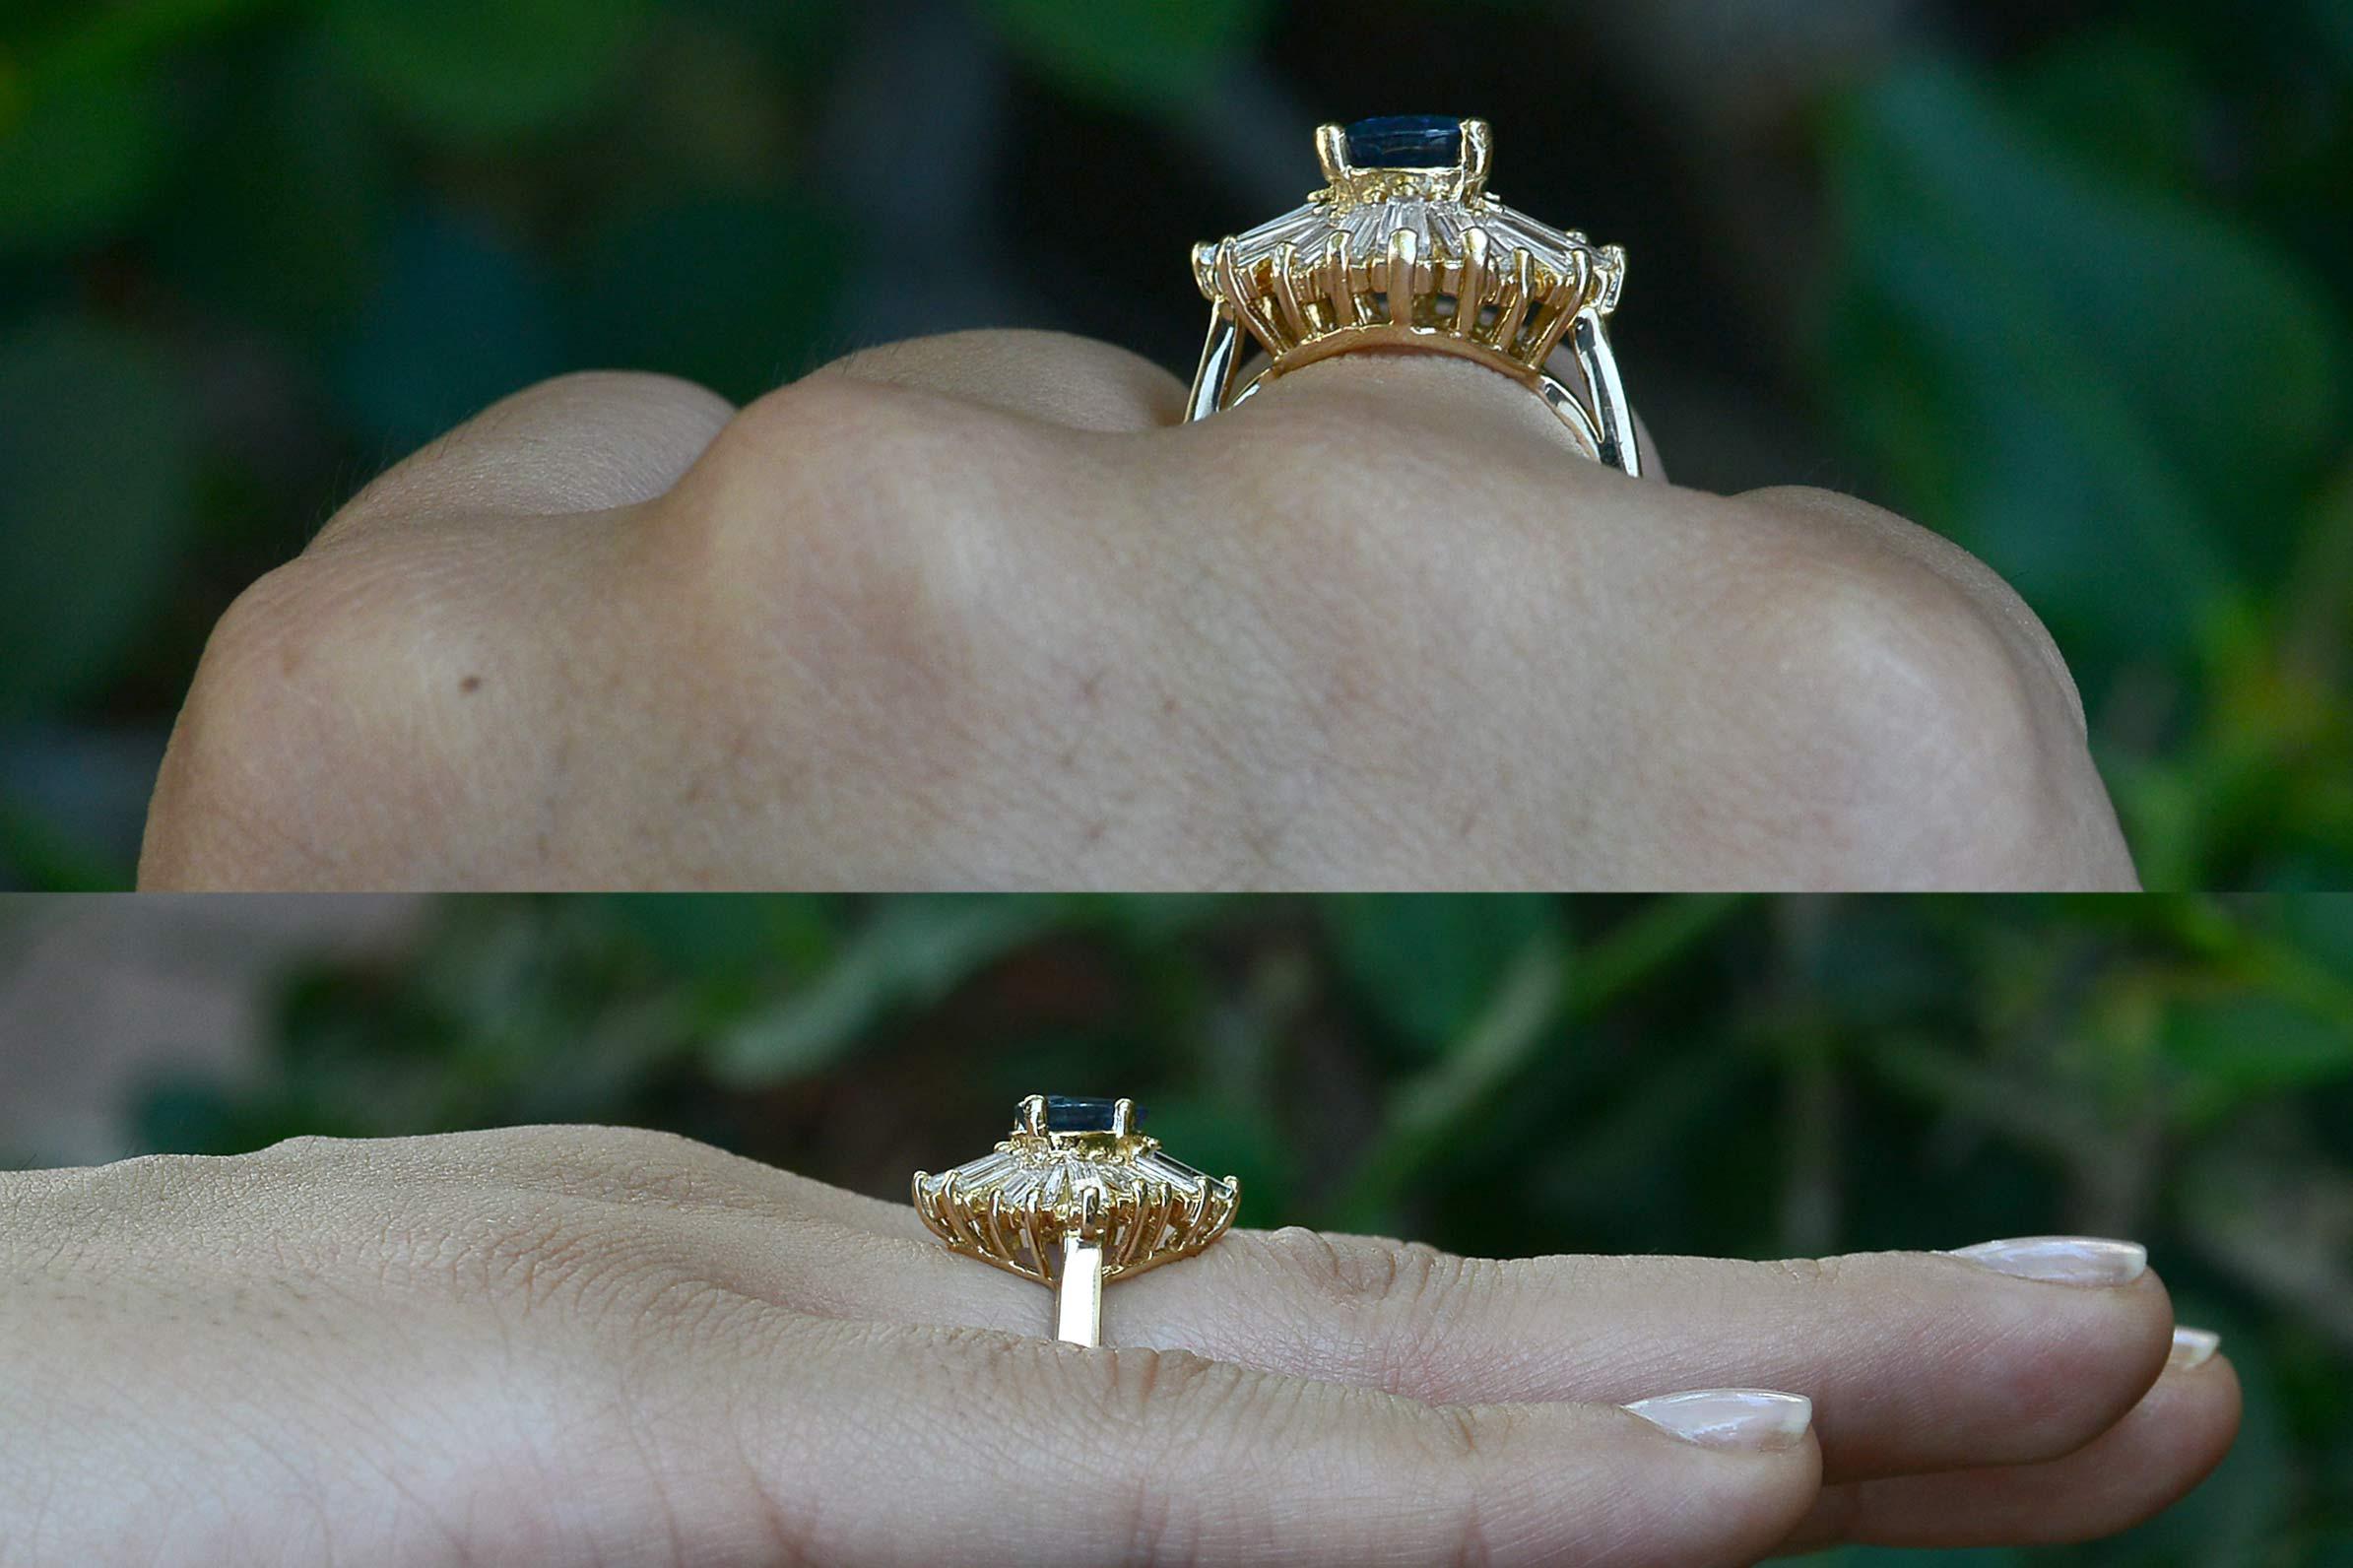 diamond cluster ballerina ring